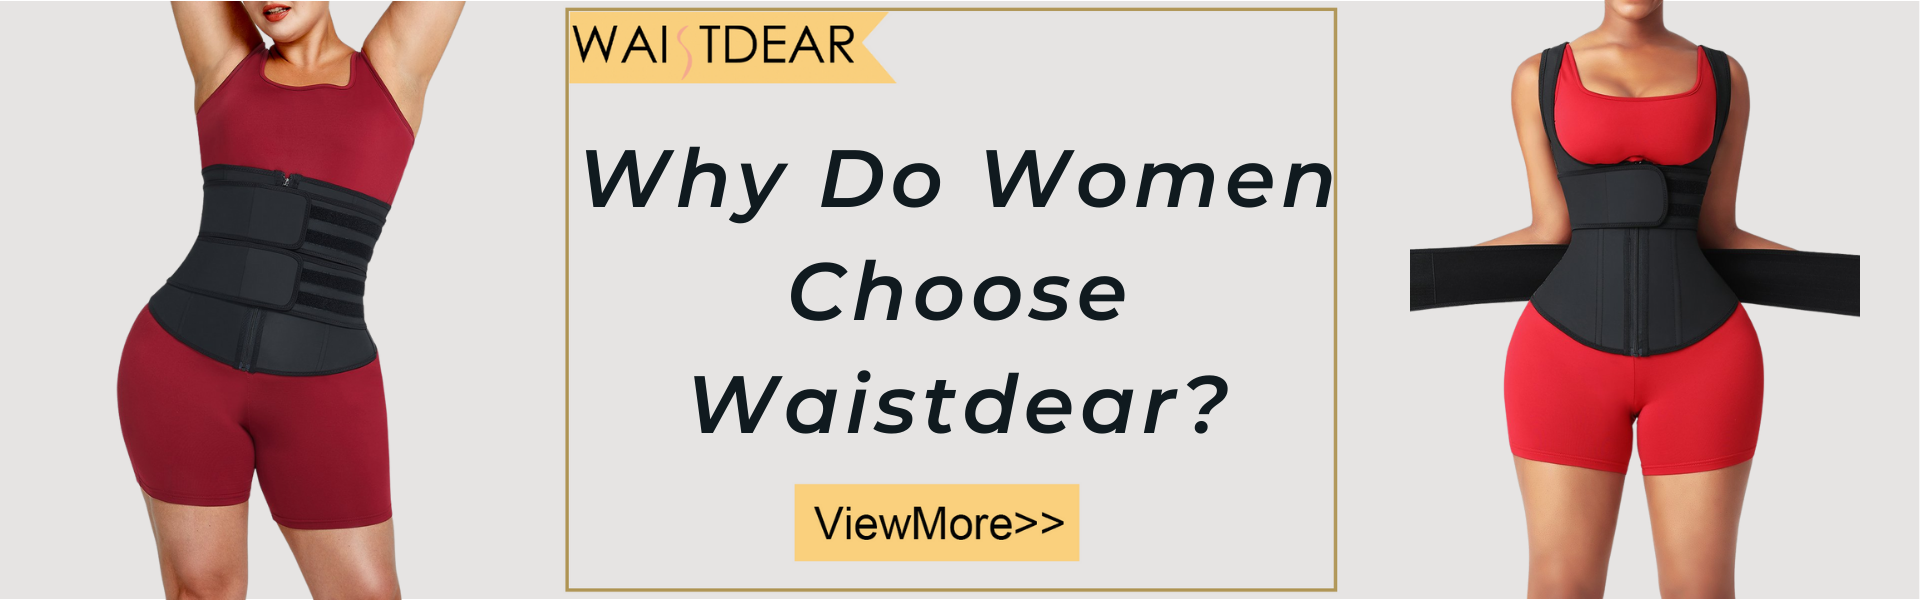 Why Do Women Choose Waistdear?